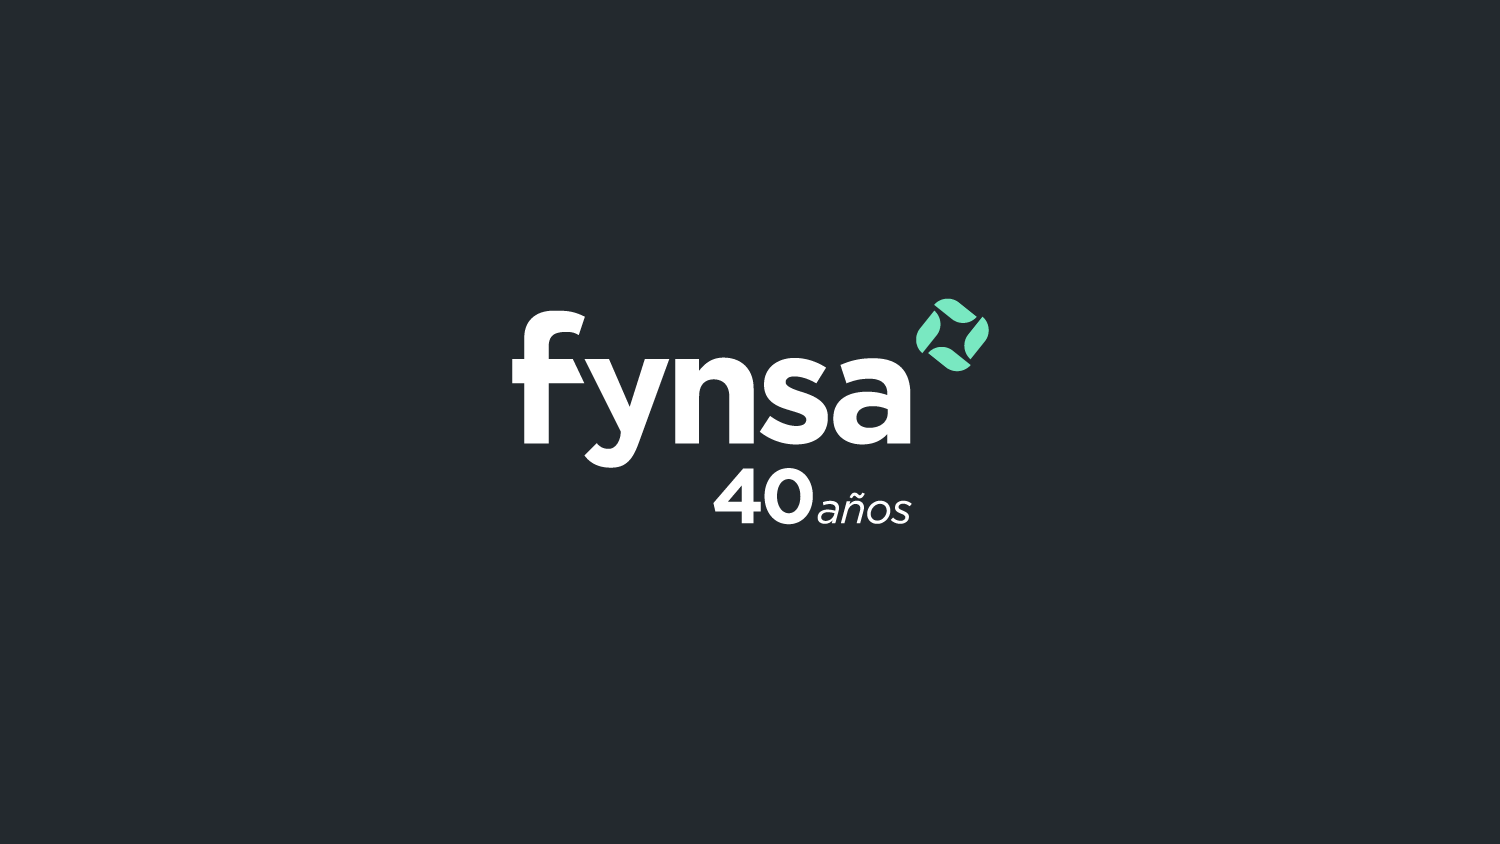 fynsa-40anios-logo-1500-1.png